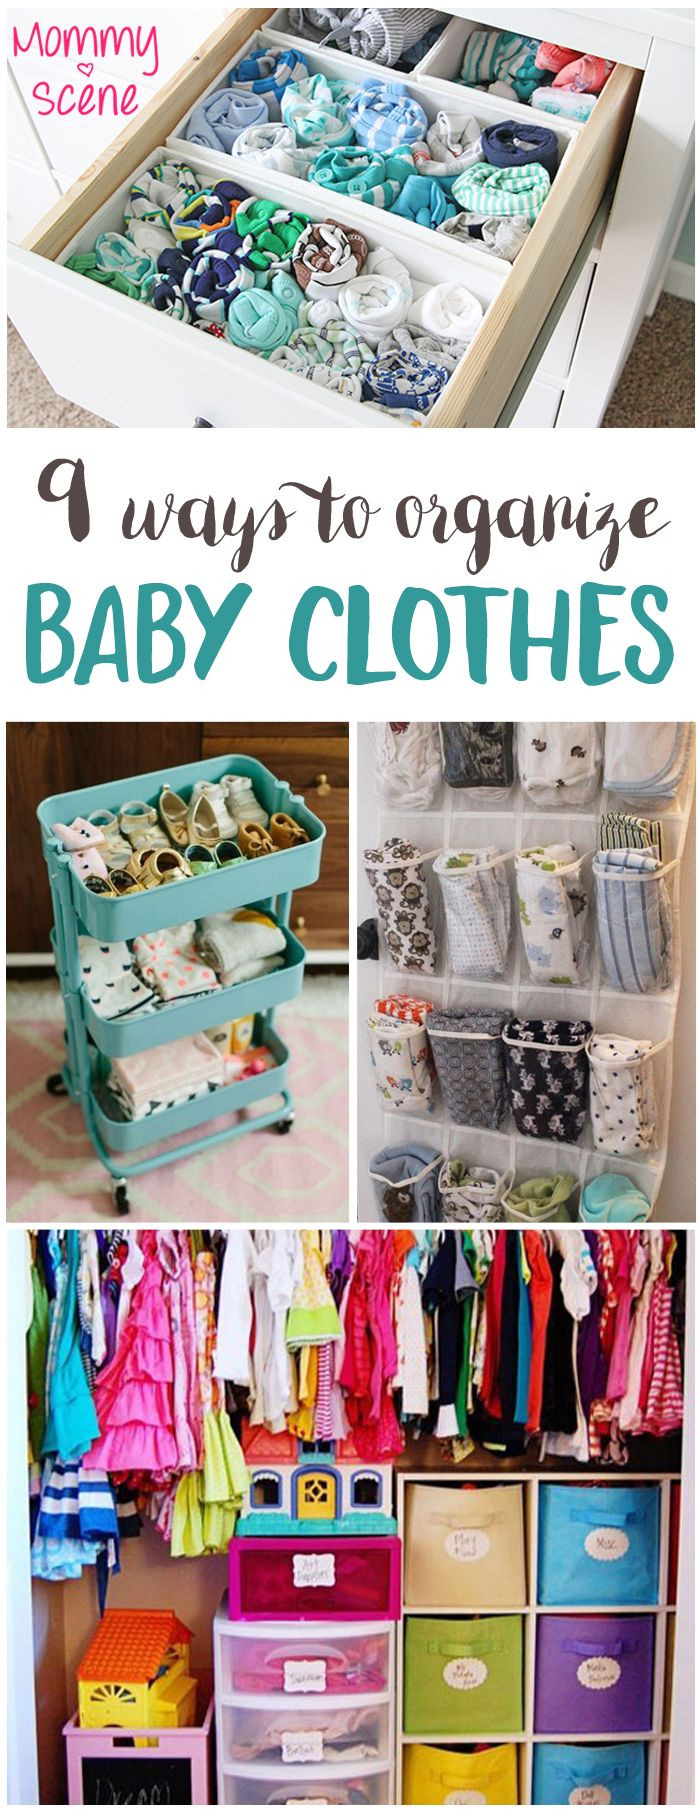 DIY Baby Clothes Organizer
 How To Organize Baby Clothes